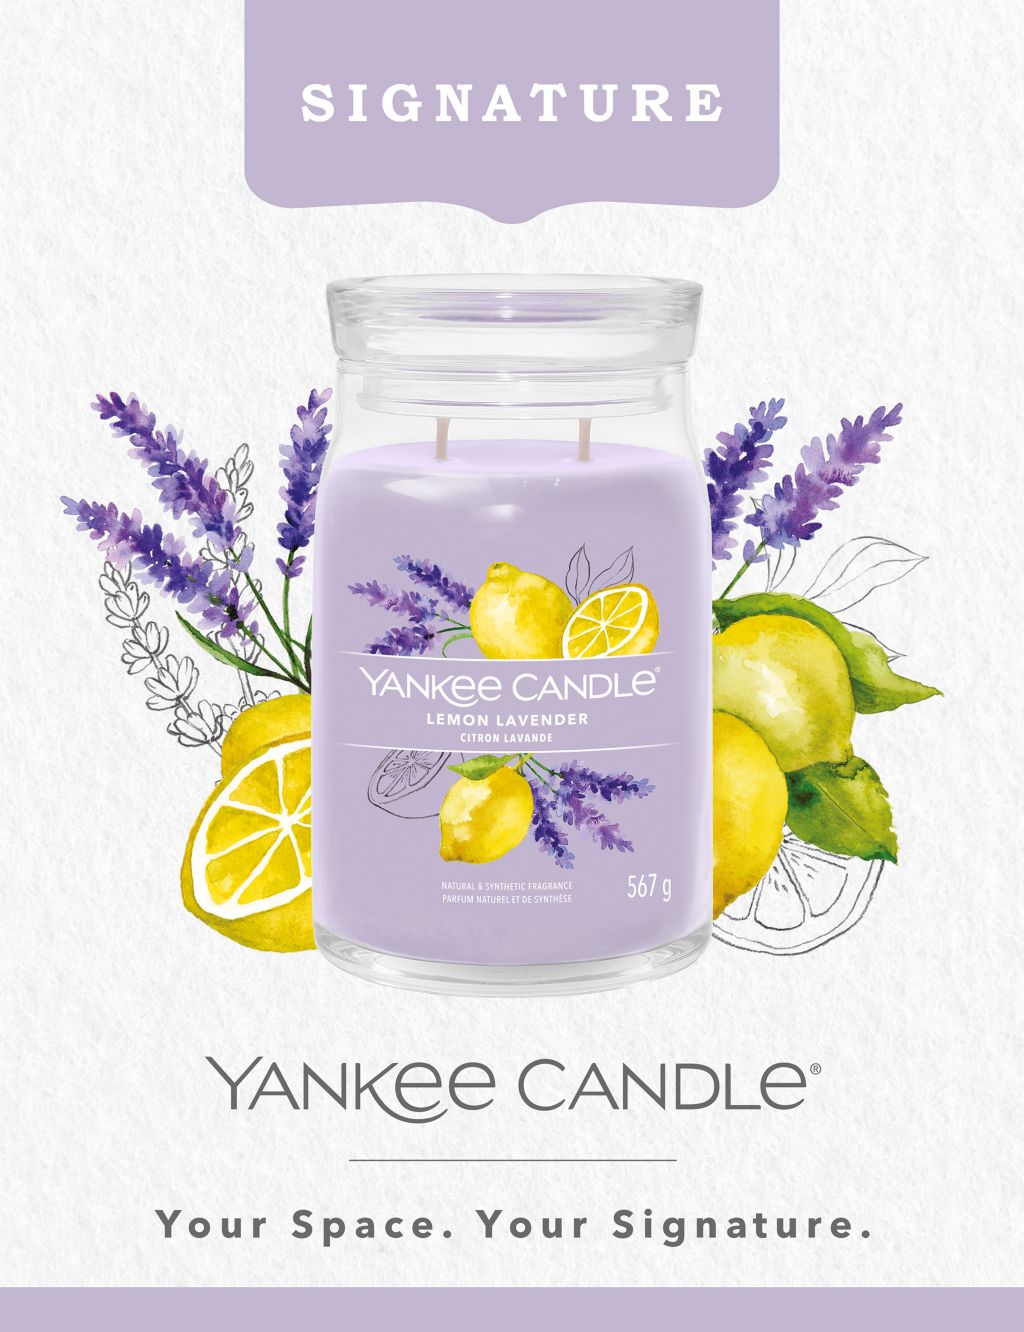 Lemon Lavender Yankee Candle - Tart